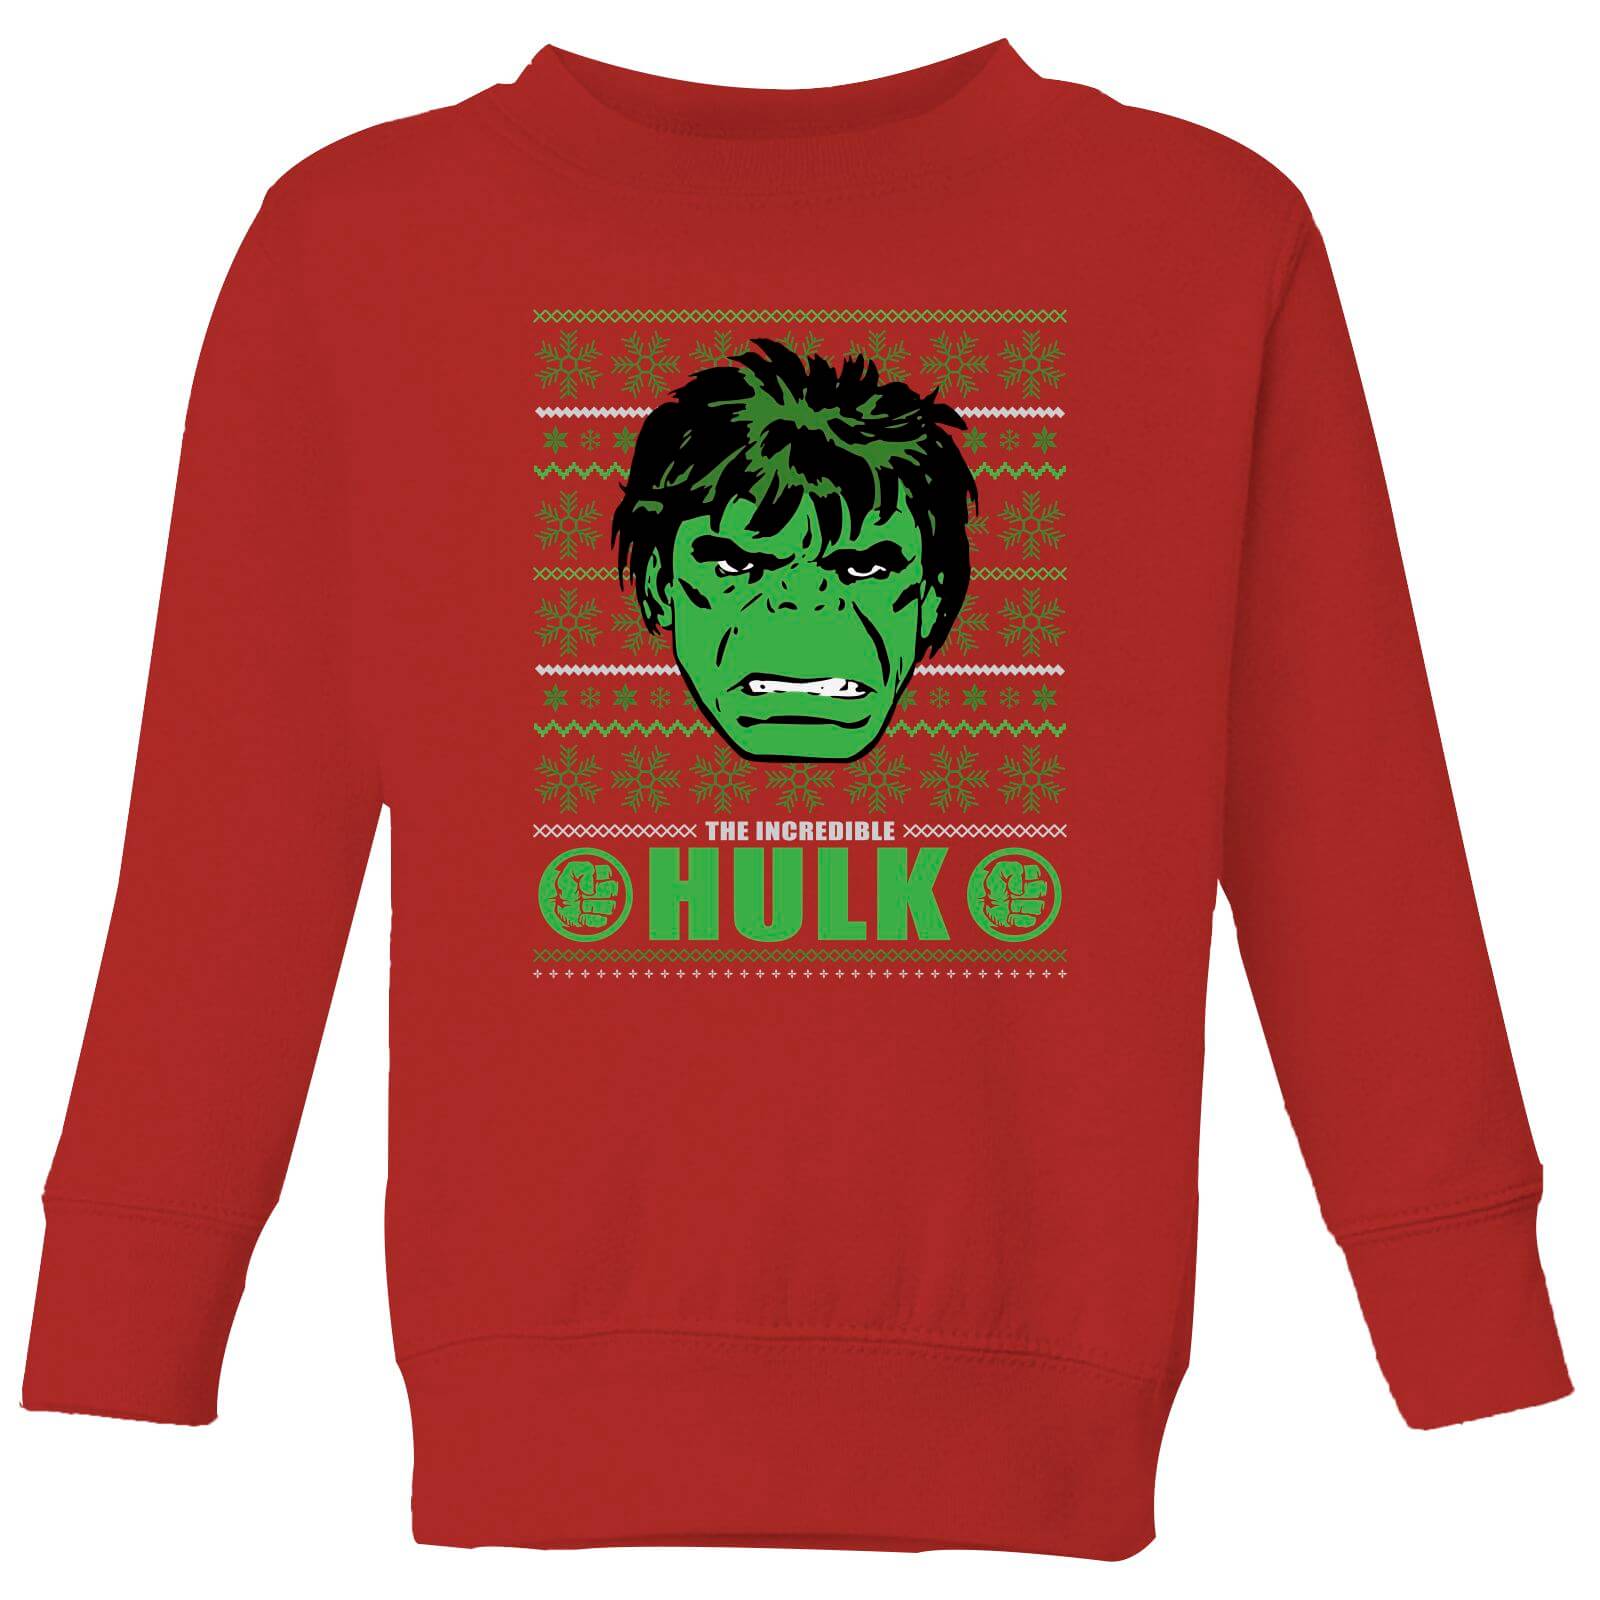 Marvel Hulk Face Kinder Weihnachtspullover – Rot – 3-4 Jahre